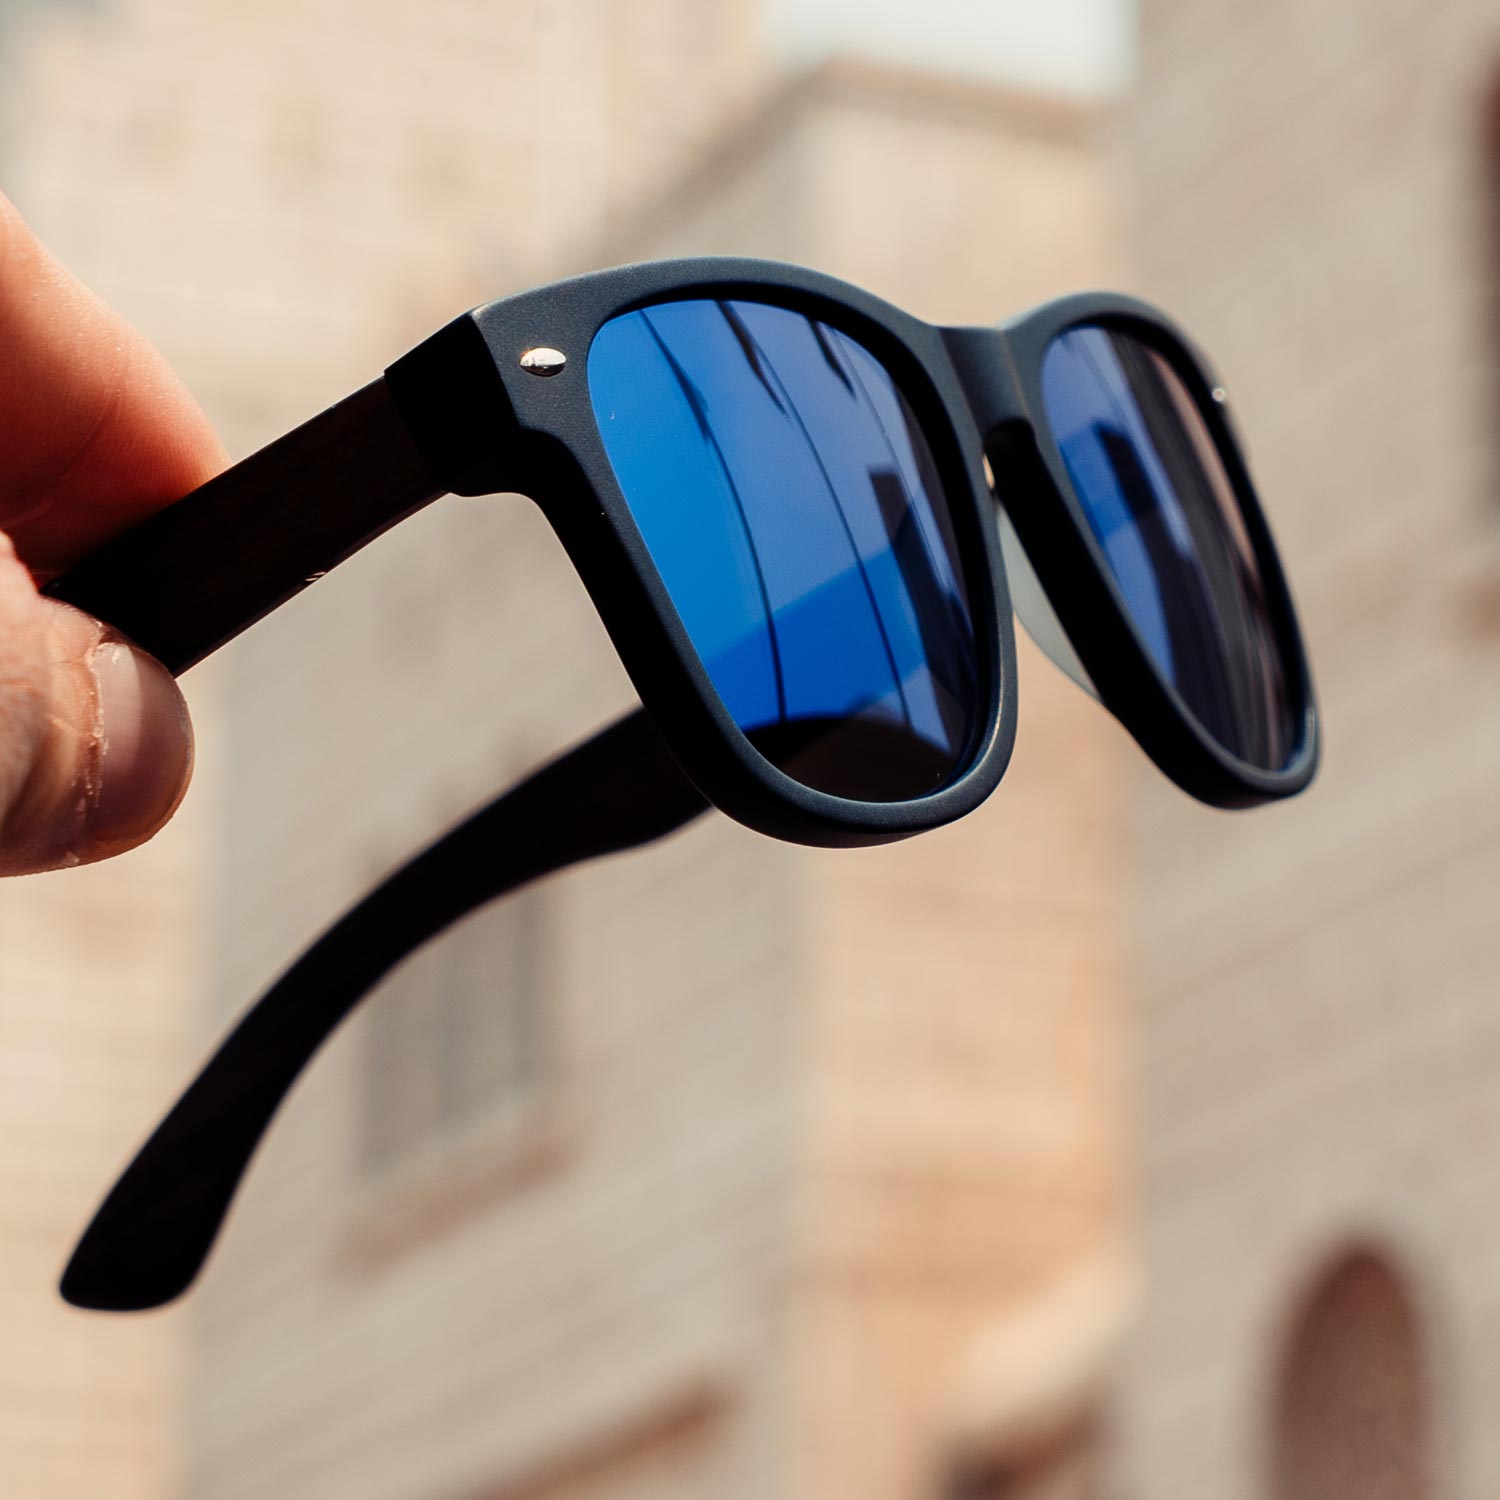 Ebony wood wayfarer sunglasses blue lenses